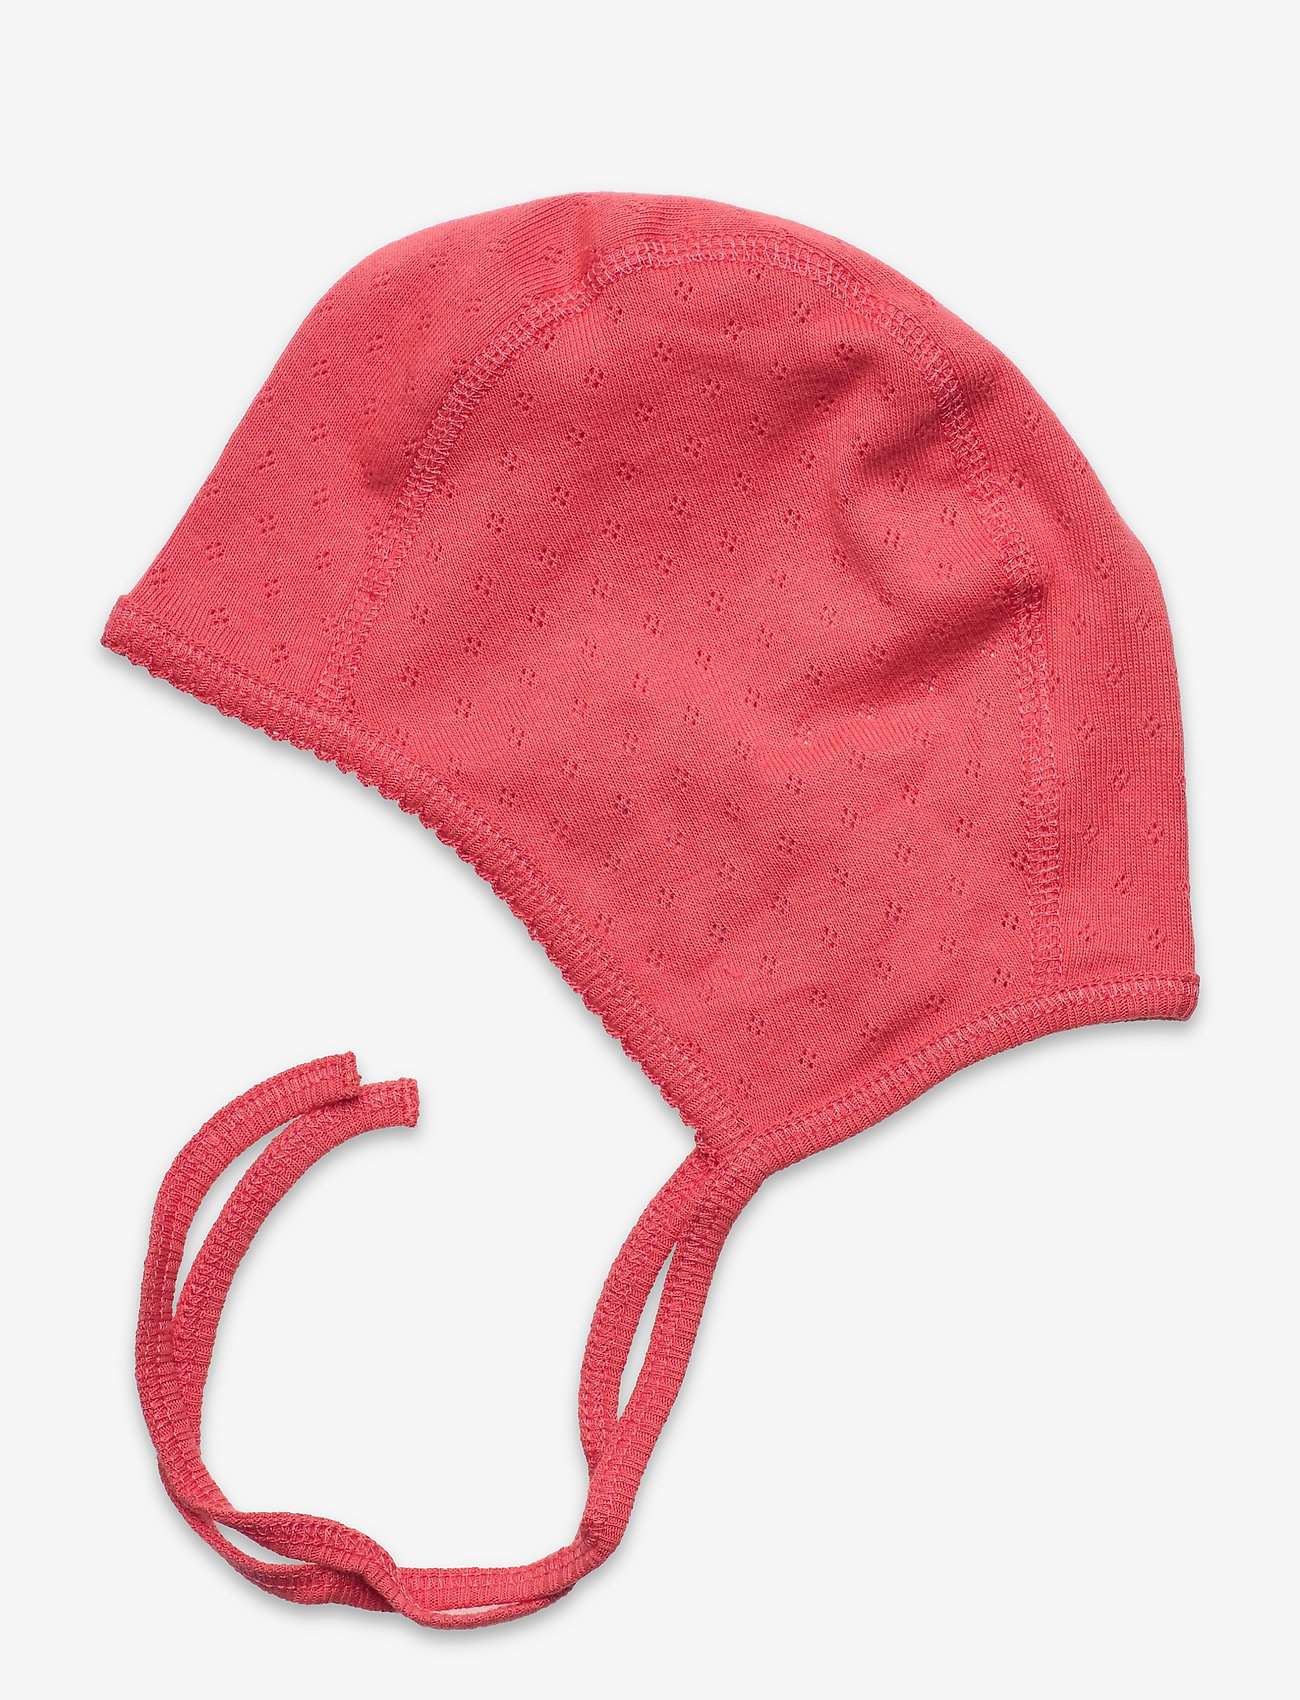 Noa Noa miniature - Hats - lowest prices - rose of sharon - 1